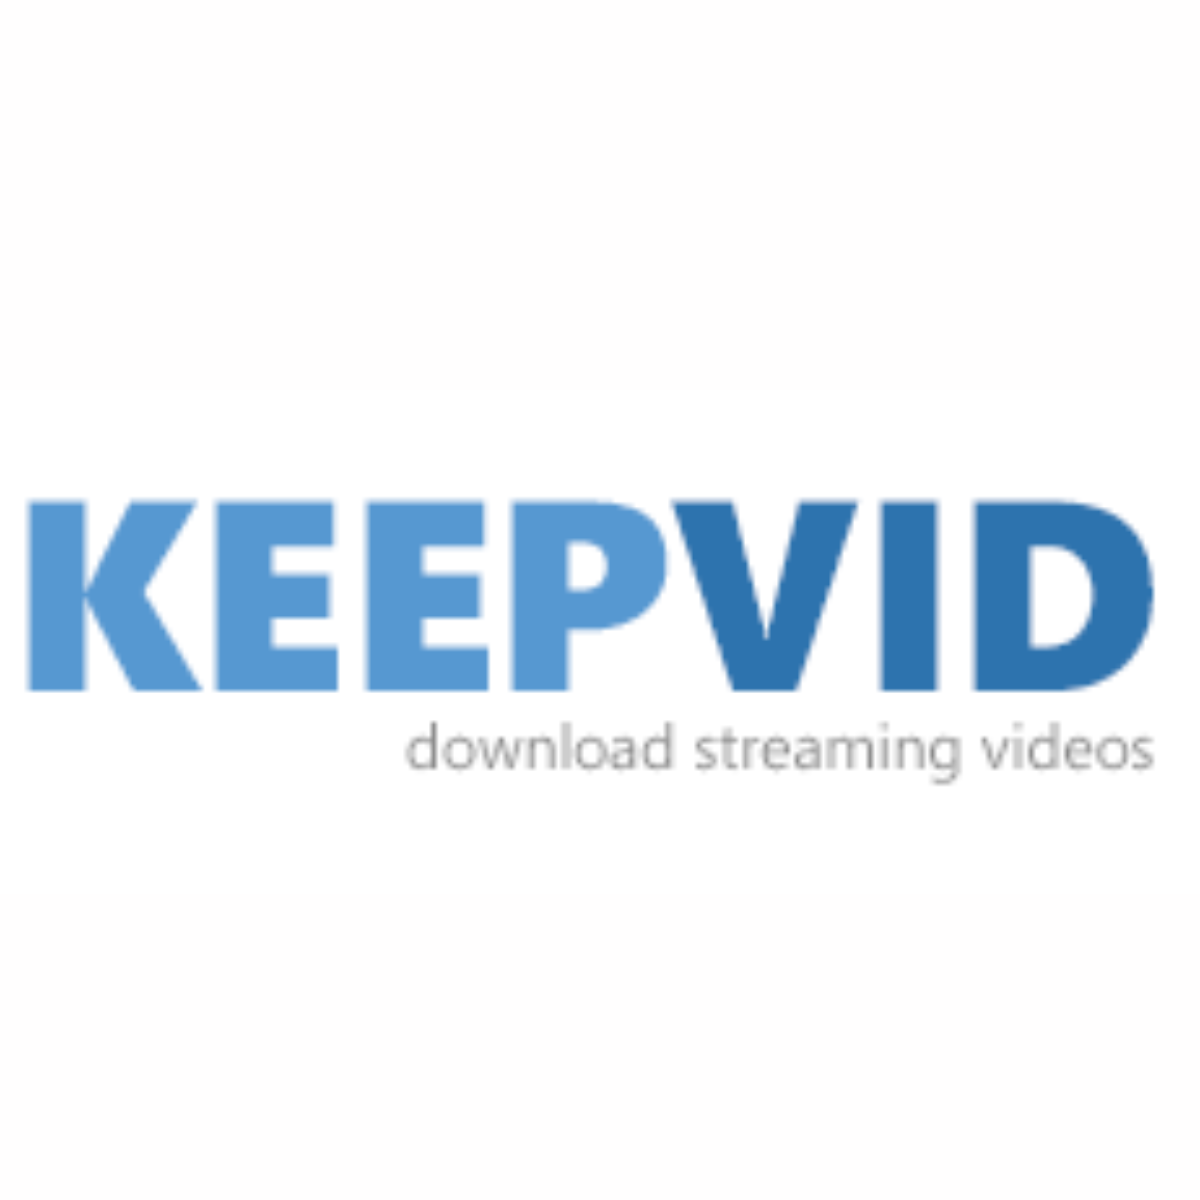 youtube video downloader online free keepvid